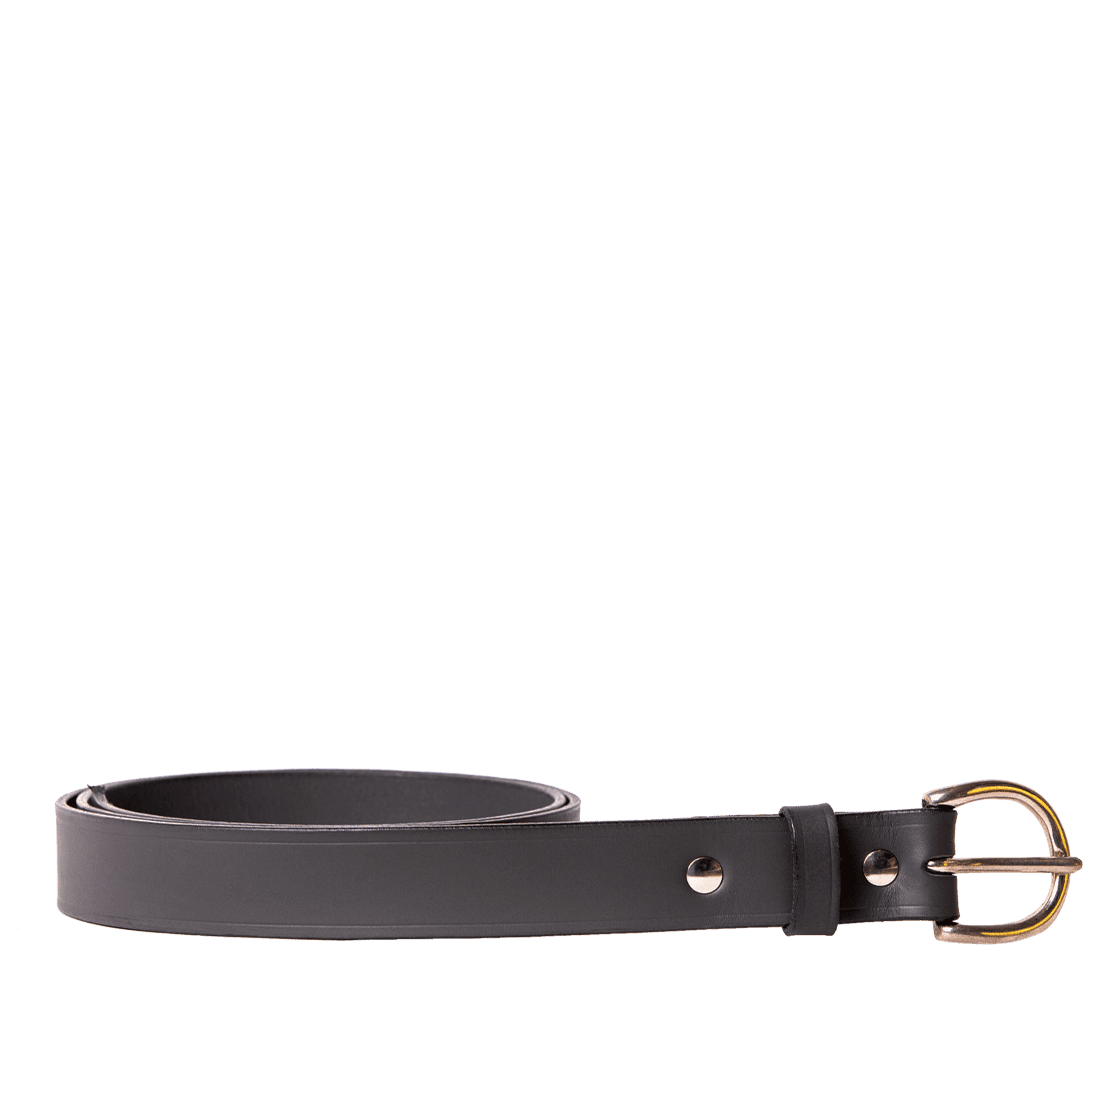 Leather London Dee belt in Italian saddle hide grey colour, handmade by Mackenzie Leather Edinburgh.